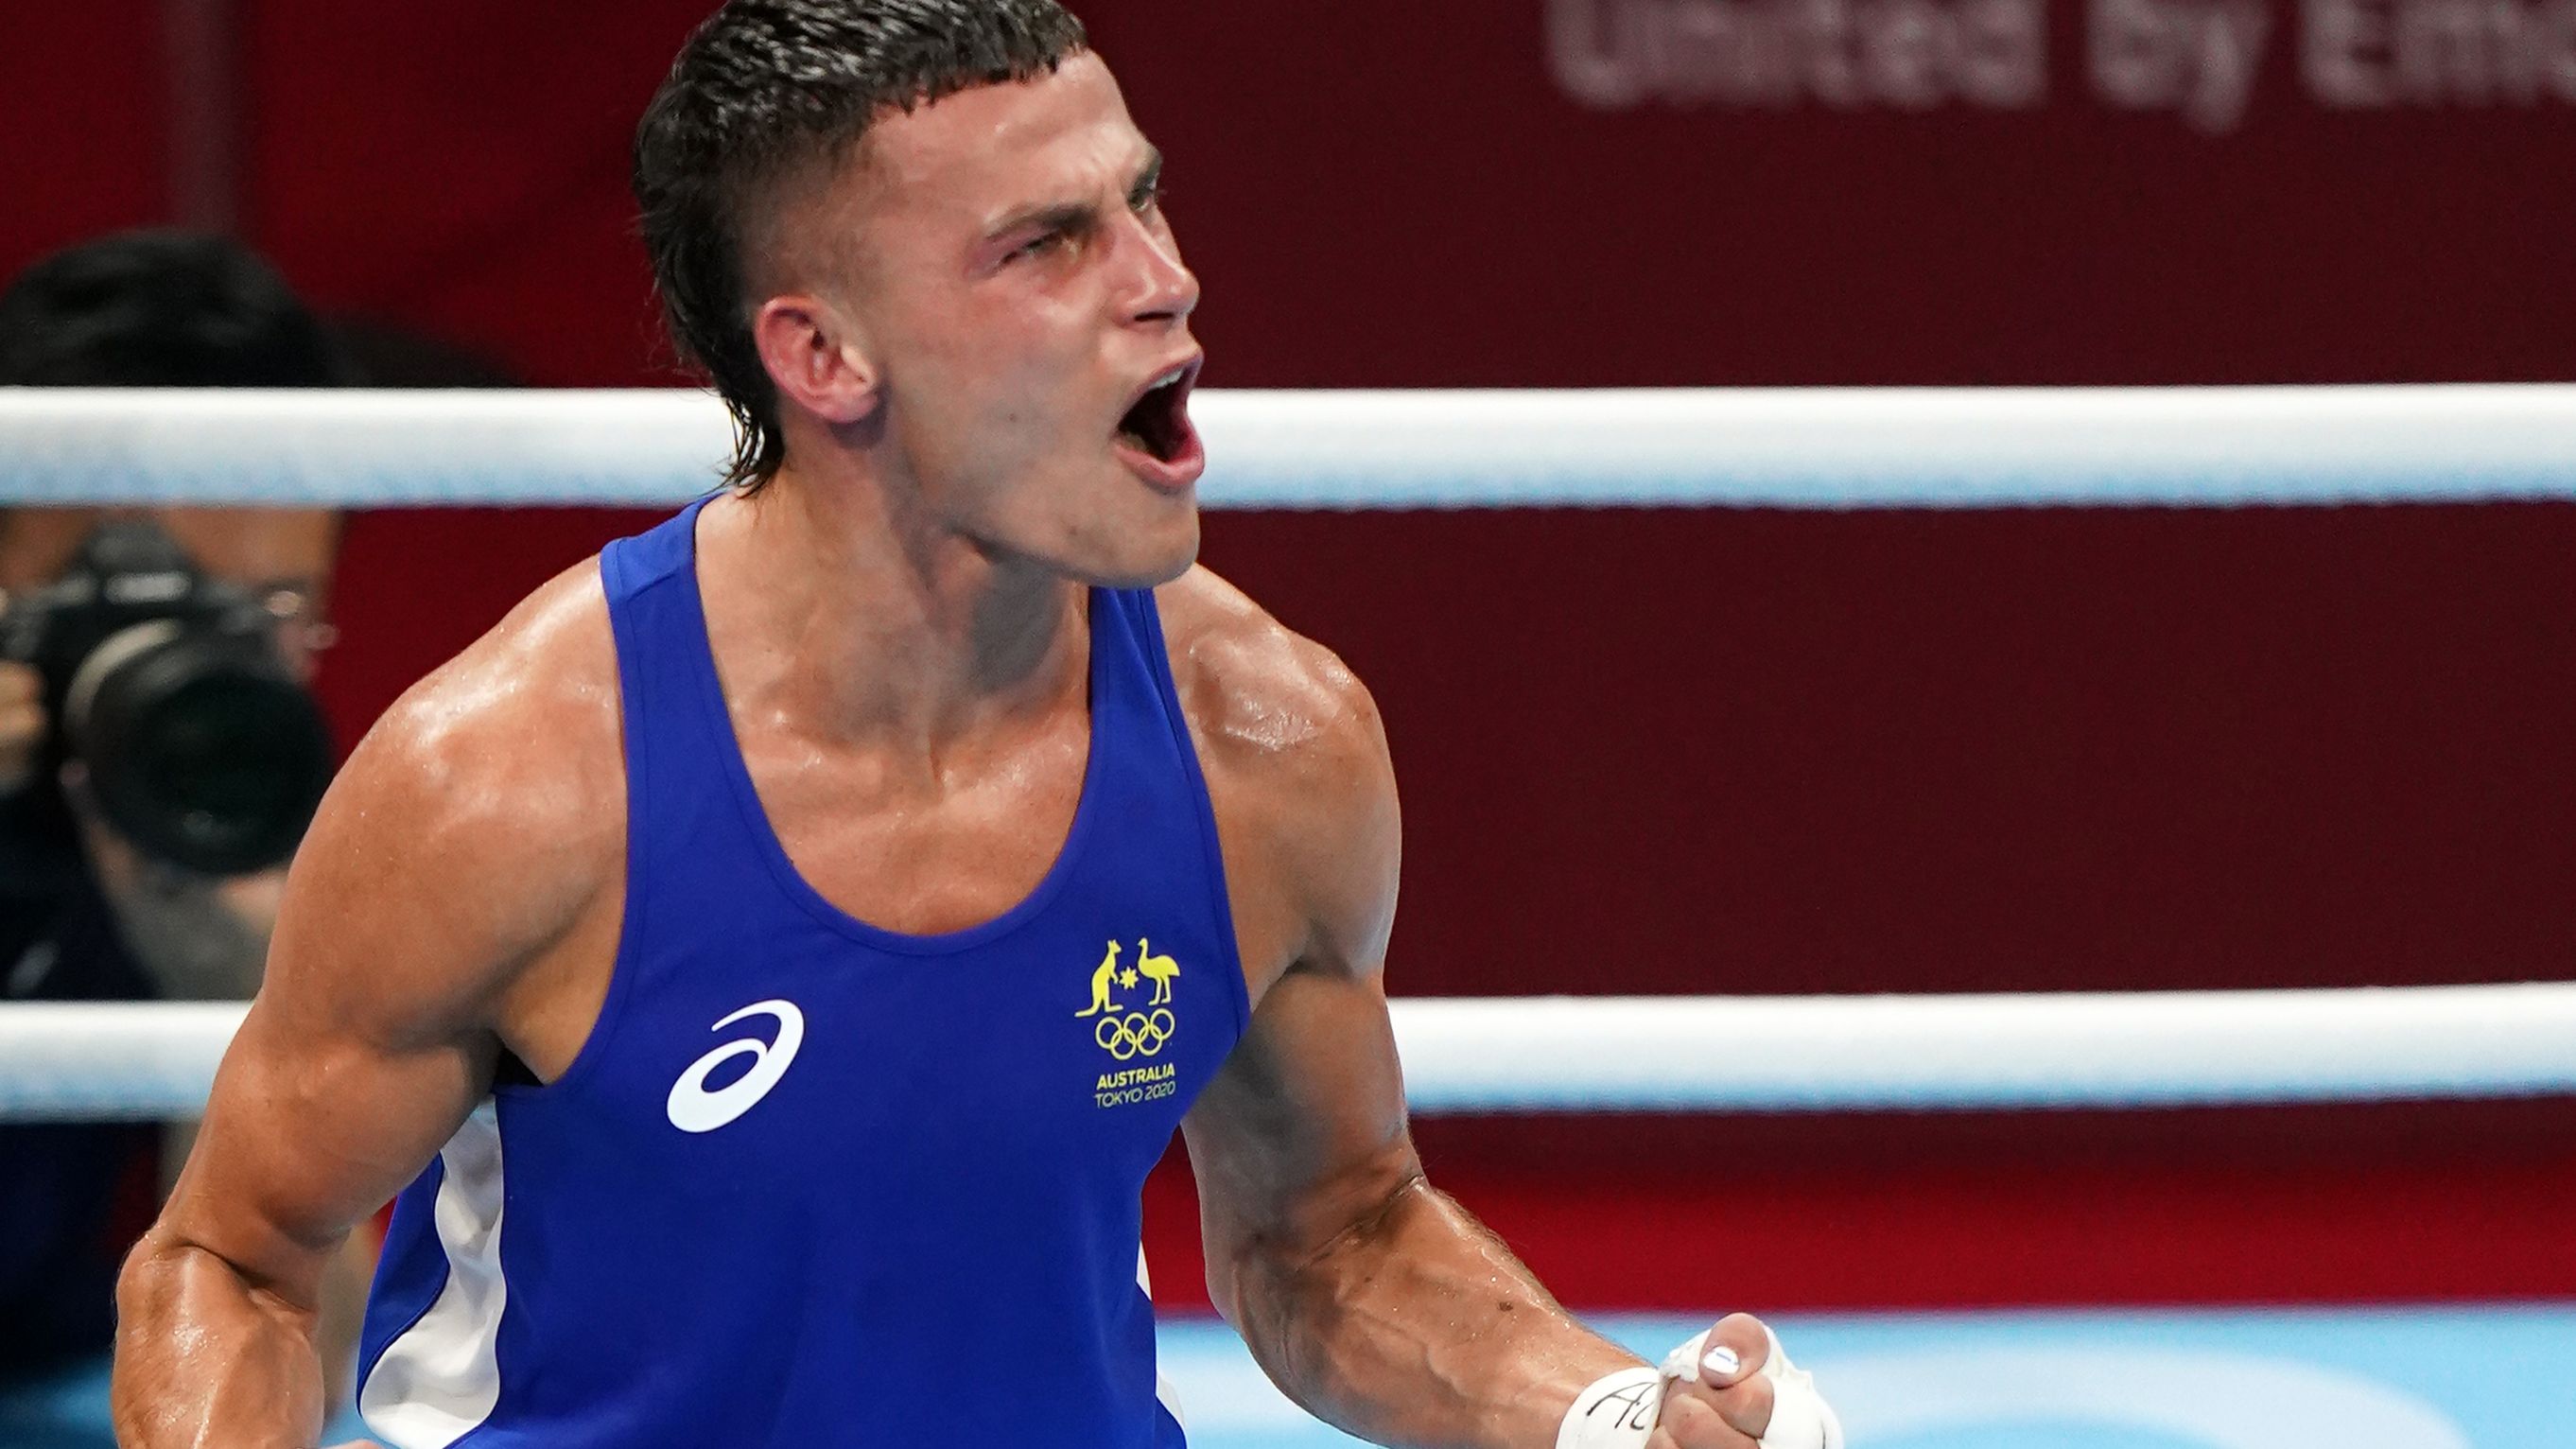 Australian lightweight boxer Harry Garside assured of Olympic medal after quarter-final win